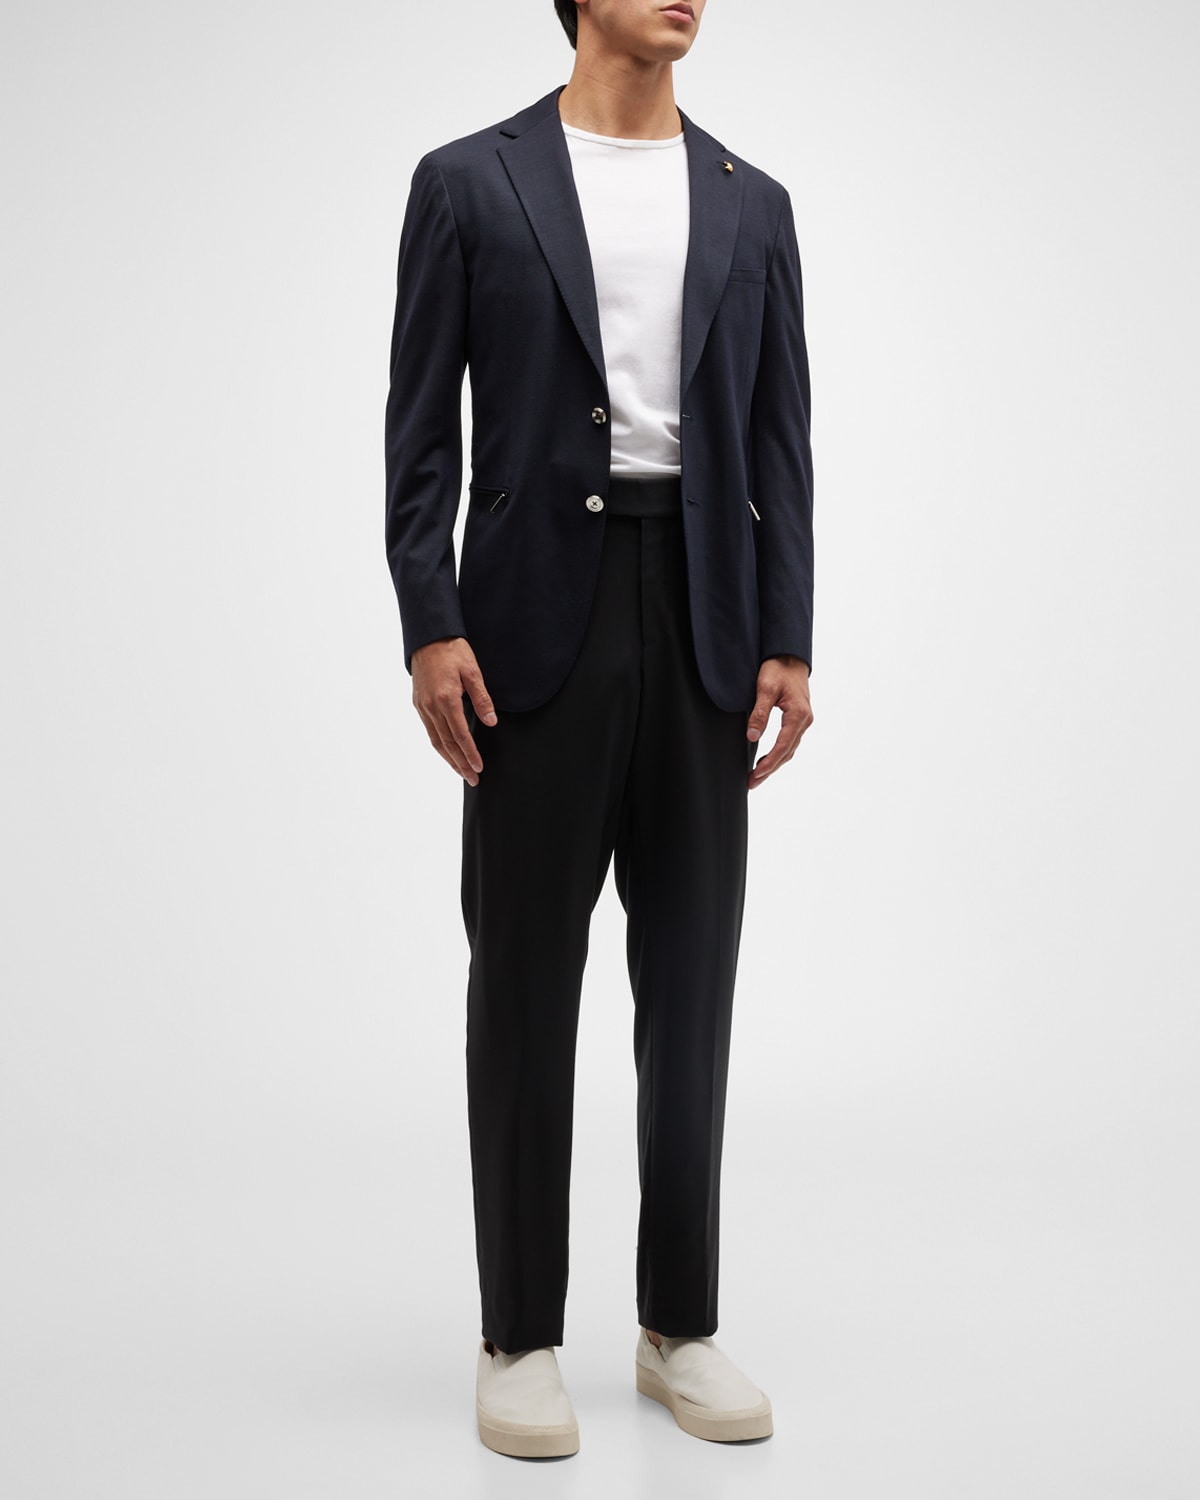 Stefano Ricci Men's Solid Wool Travel Suit In Dark Blue